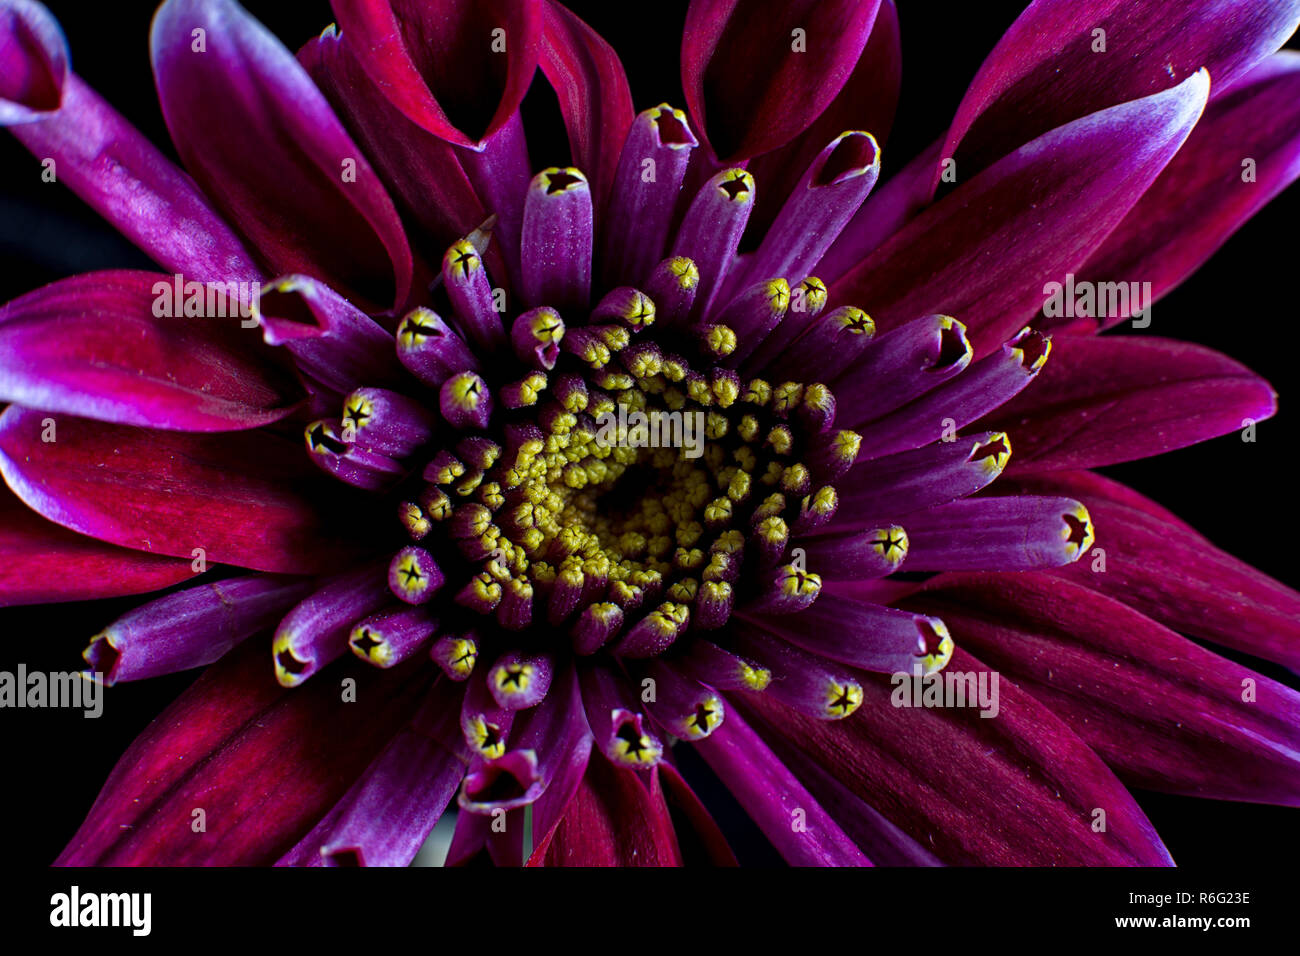 aster flower macro details Stock Photo